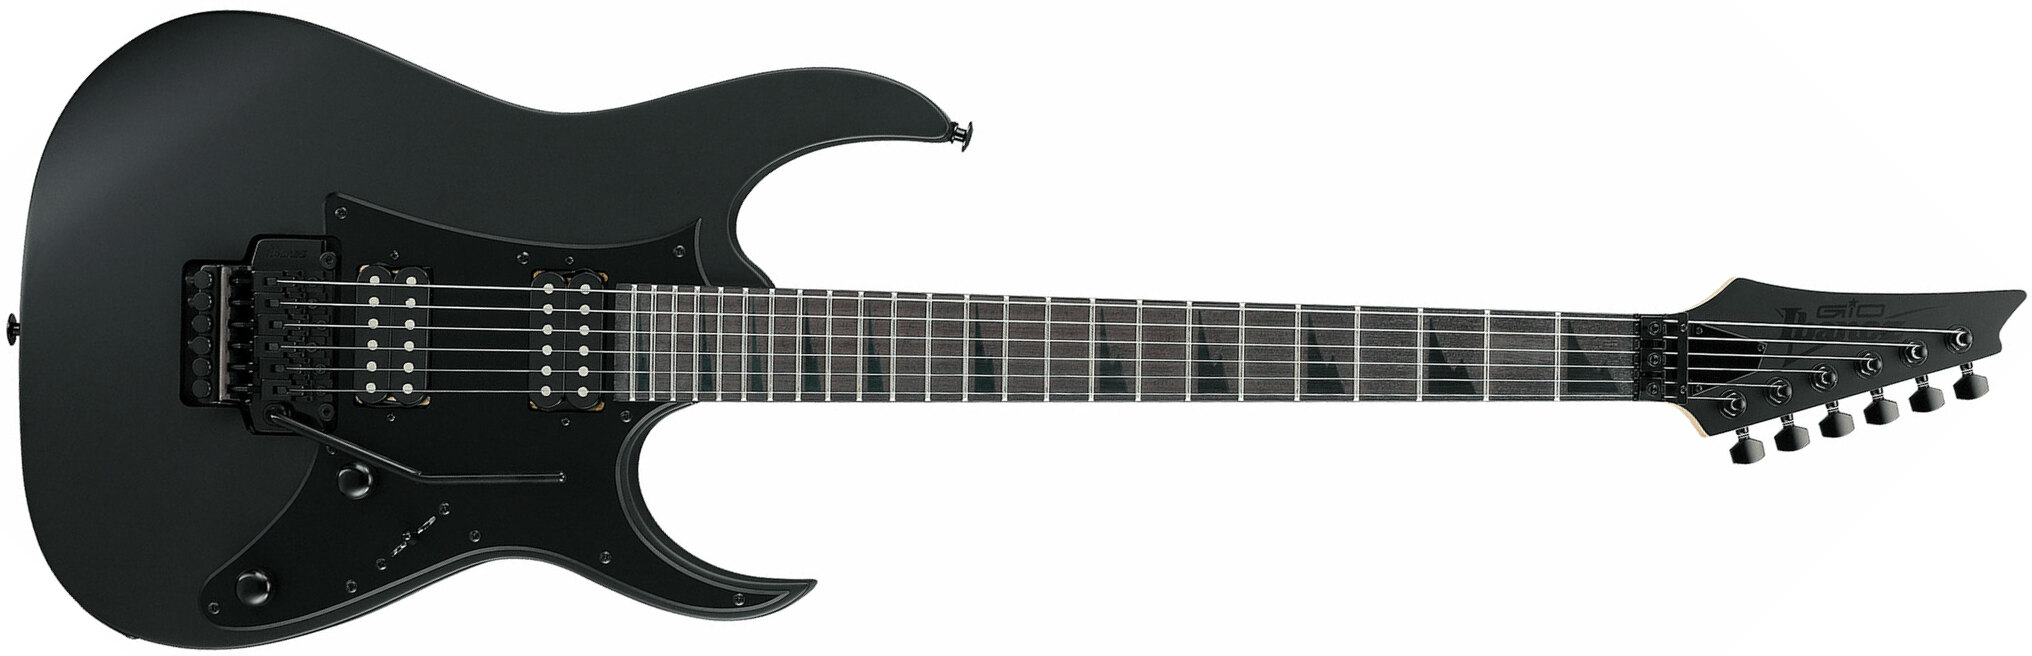 Ibanez Grgr330ex Bkf Gio 2h Fr Pur - Black Flat - E-Gitarre in Str-Form - Main picture